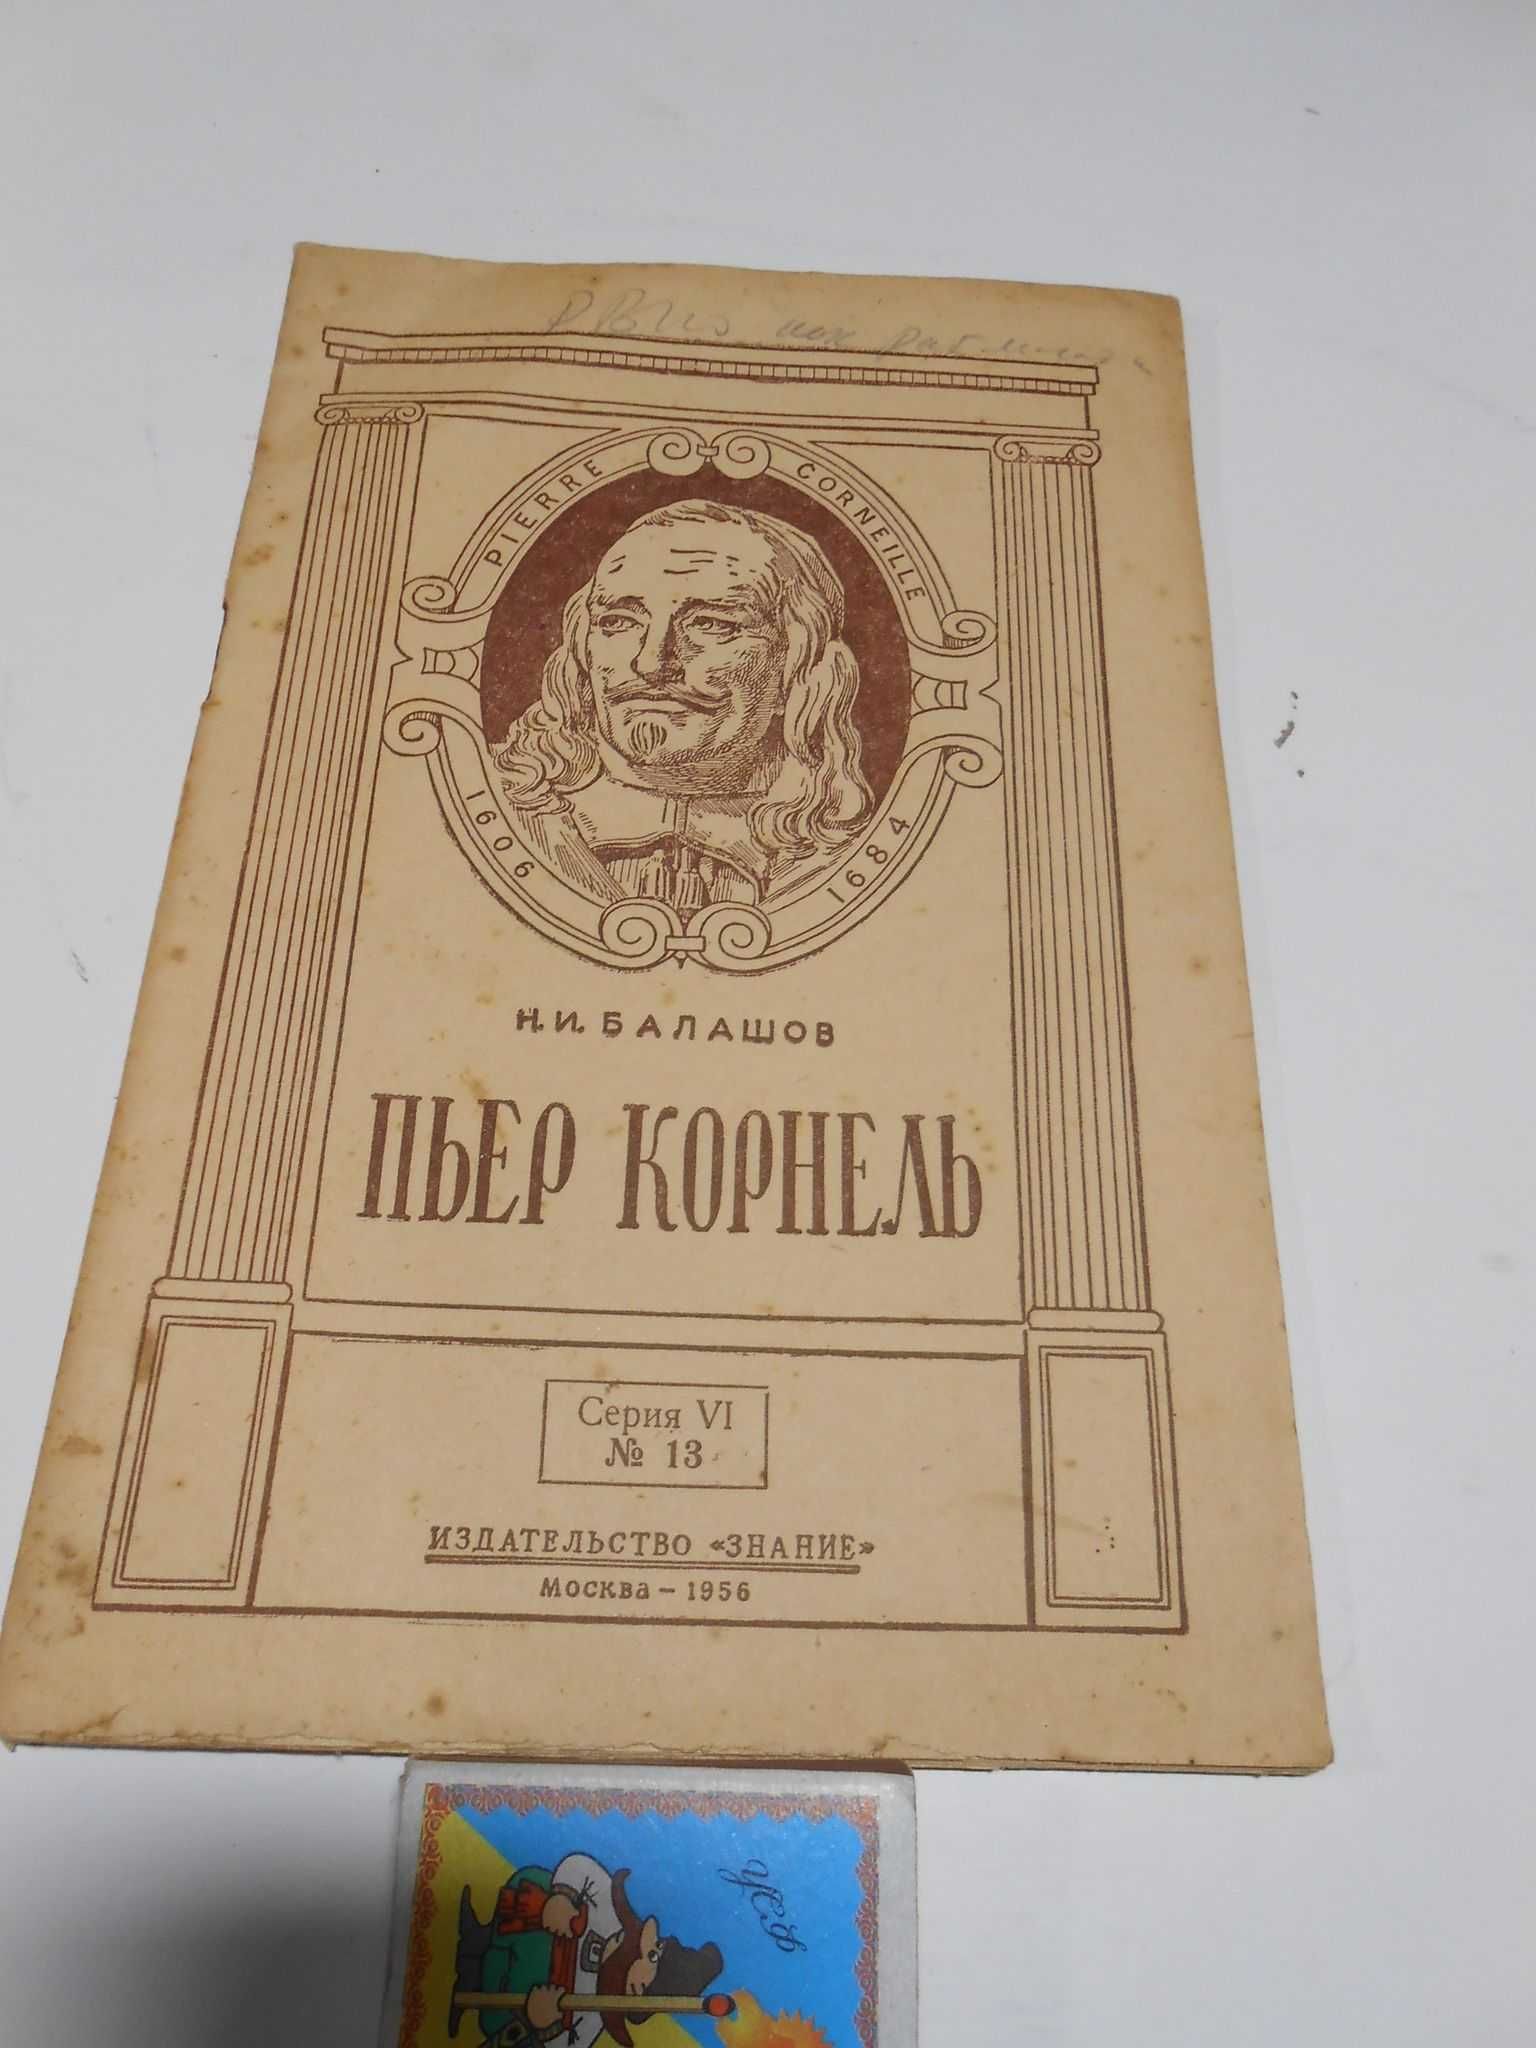 Книги о литературе,1950 гг. Винтаж.Одним лотом.